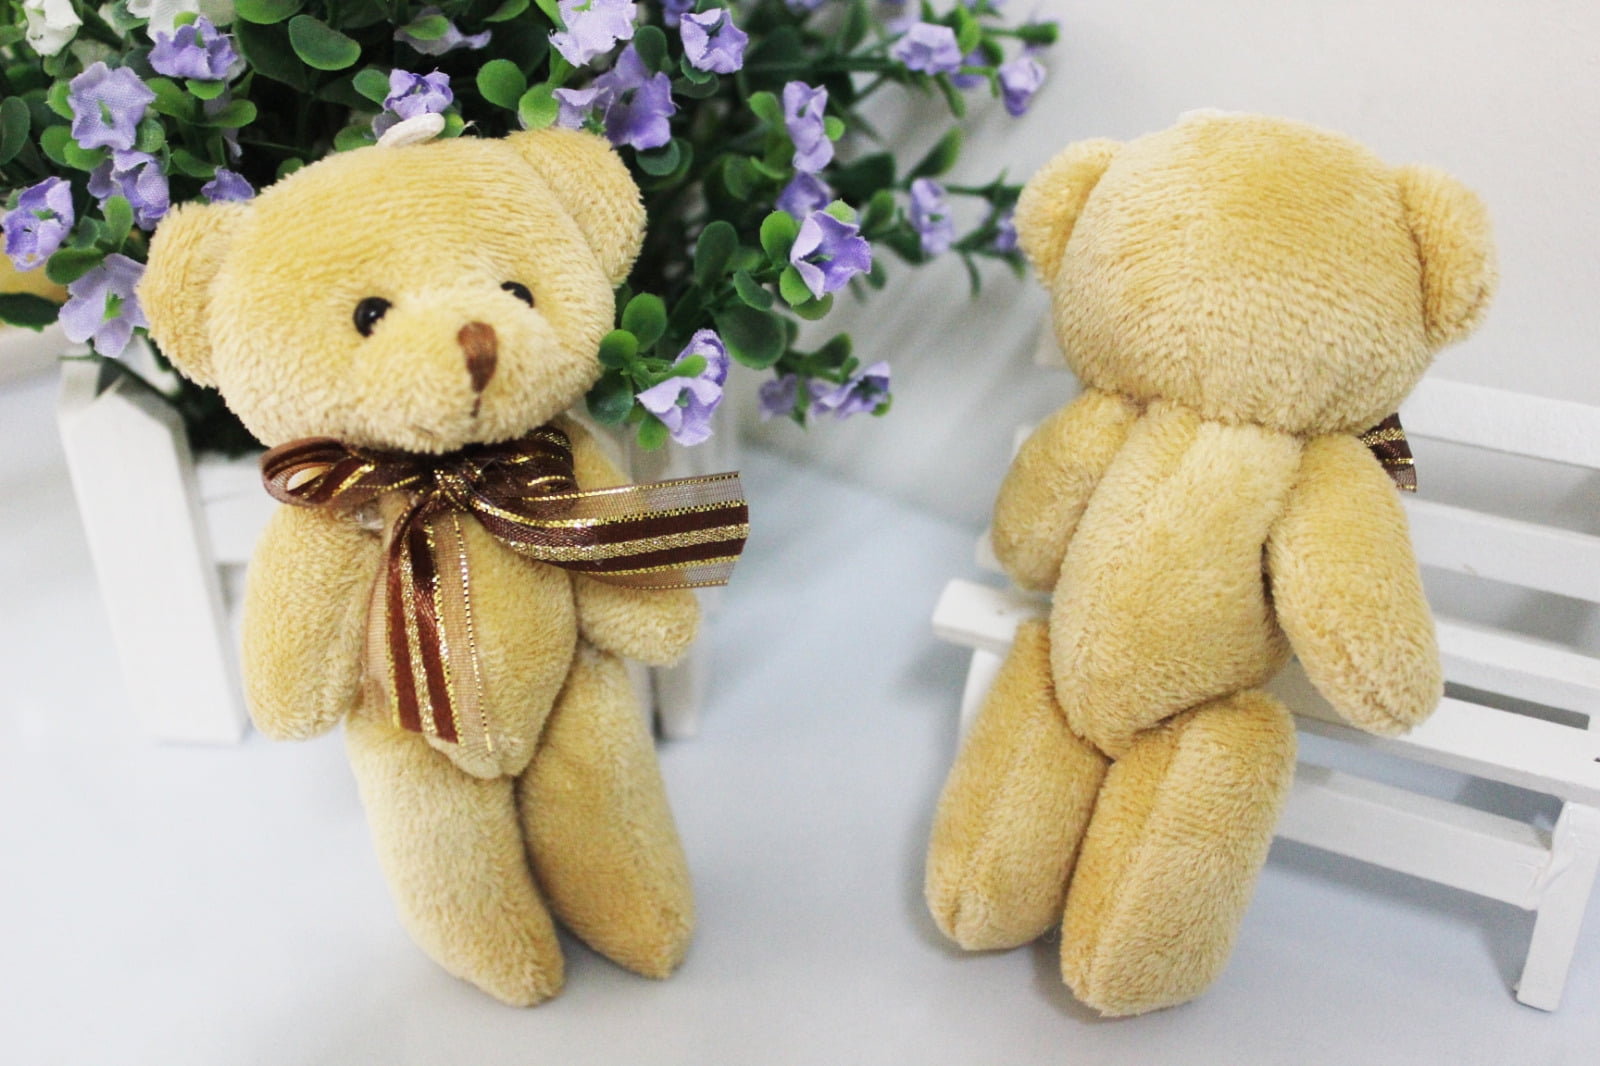 Mini Brown Ribbon Teddy Bear Soft Plush Stuffed Kids Toys Doll for Bouquet 12CM